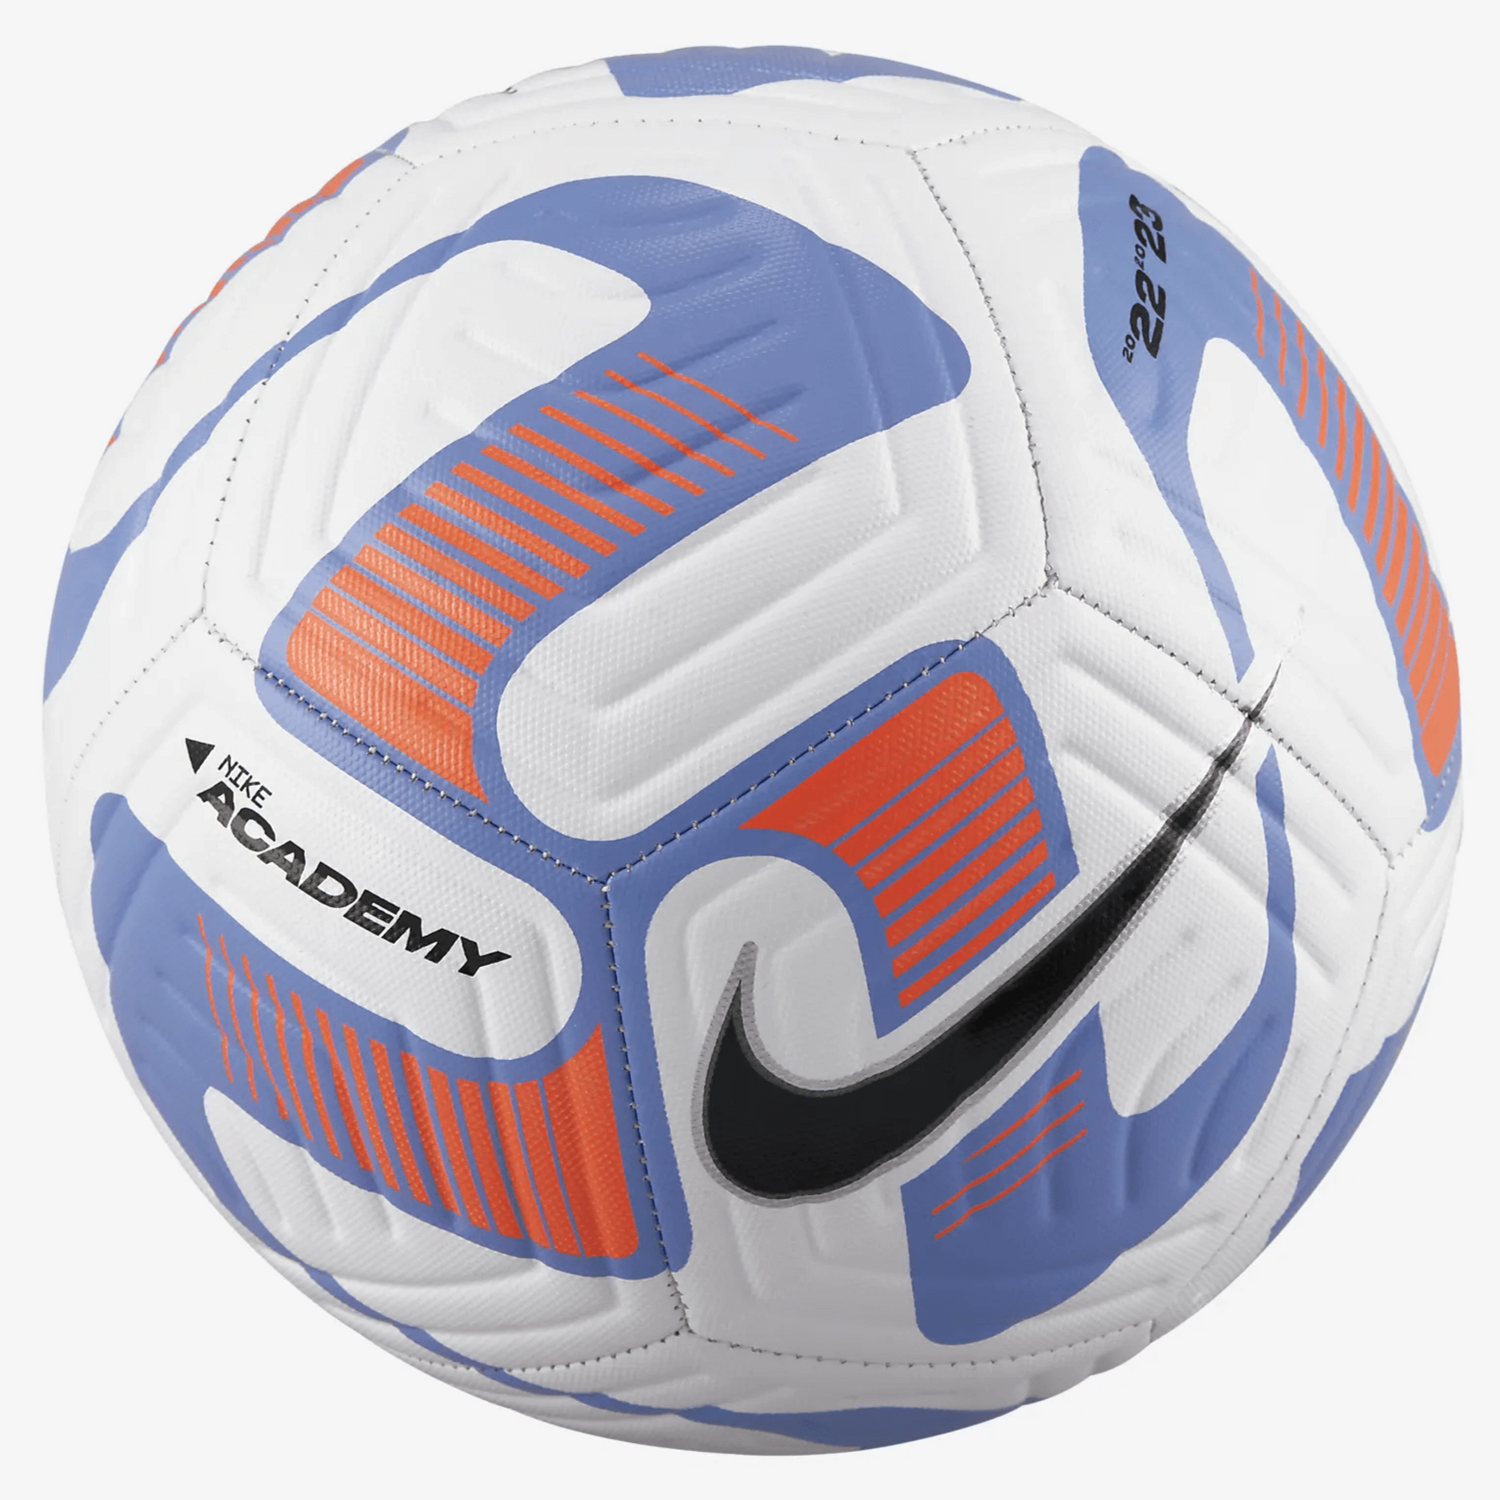  Nike FA22 Academy Soccer Ball - White-Light Thistle-Black (Front)